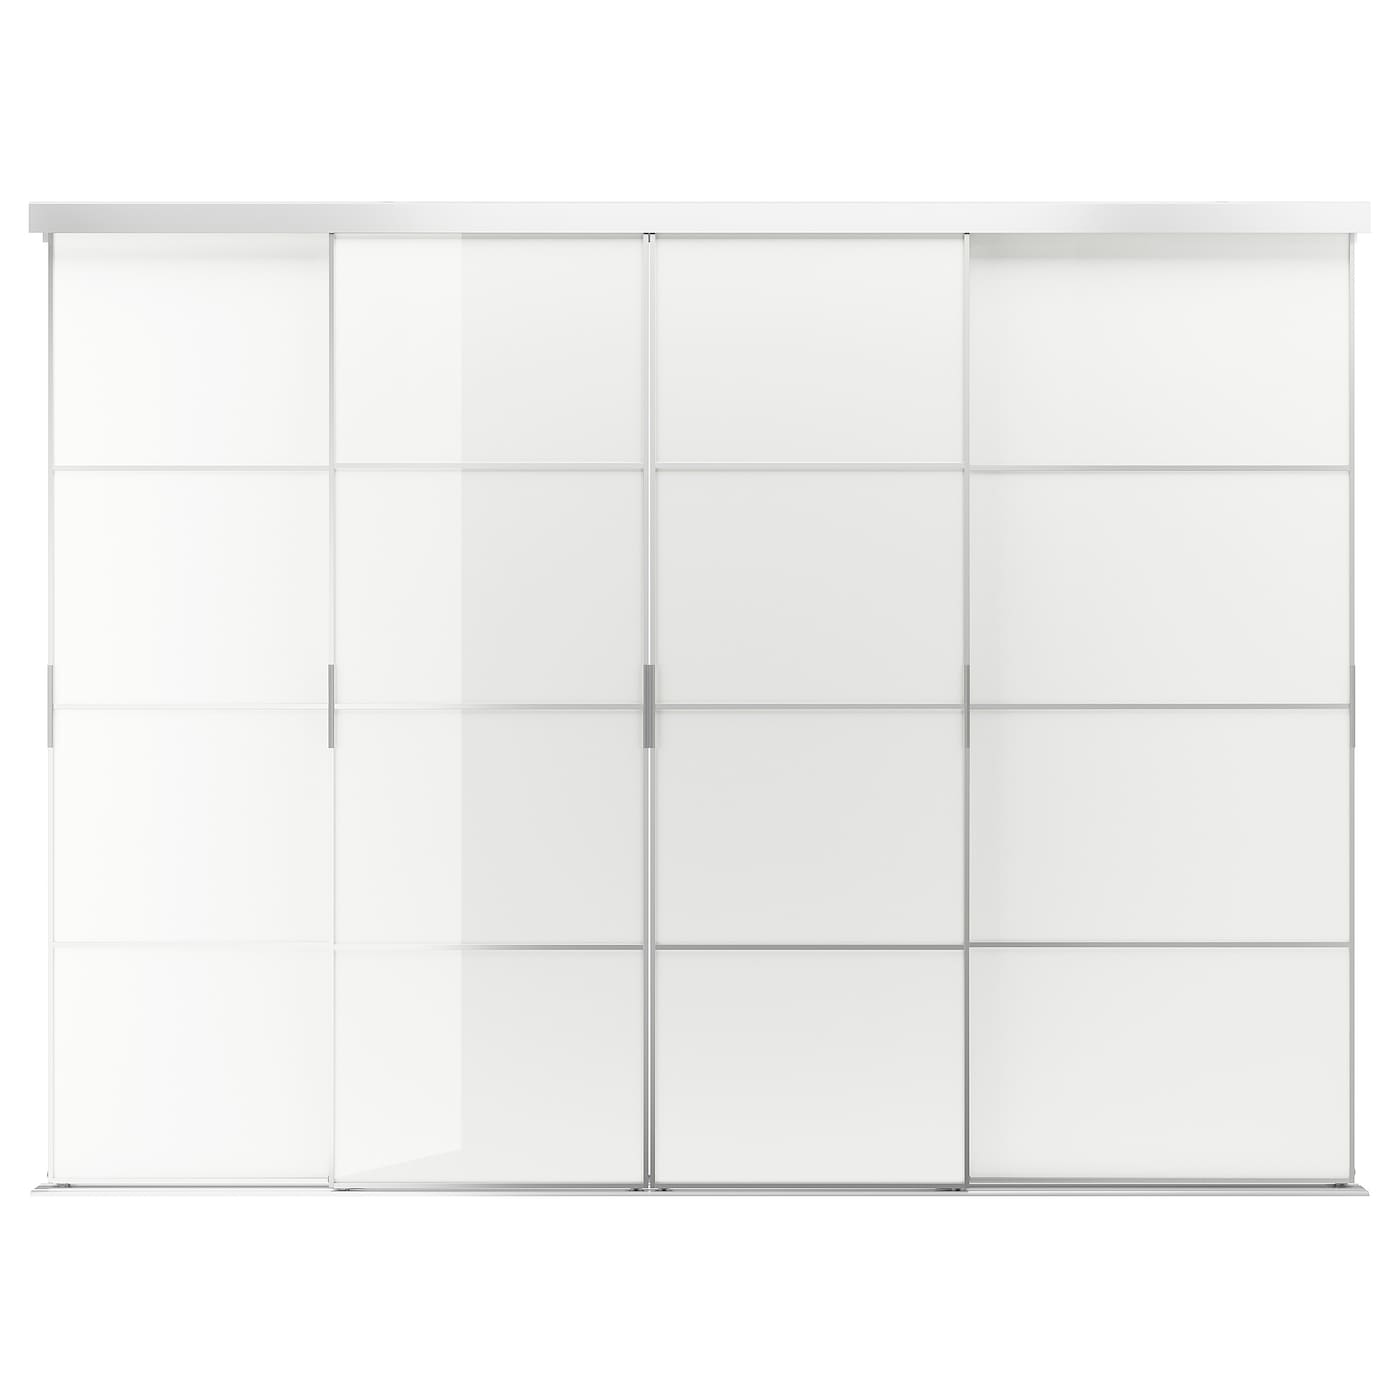 Пара рам раздвижных дверей - SKYTTA/ FARVIK IKEA/ СКЮТТА/ ФЭРВИК ИКЕА, 326x240 см, белый